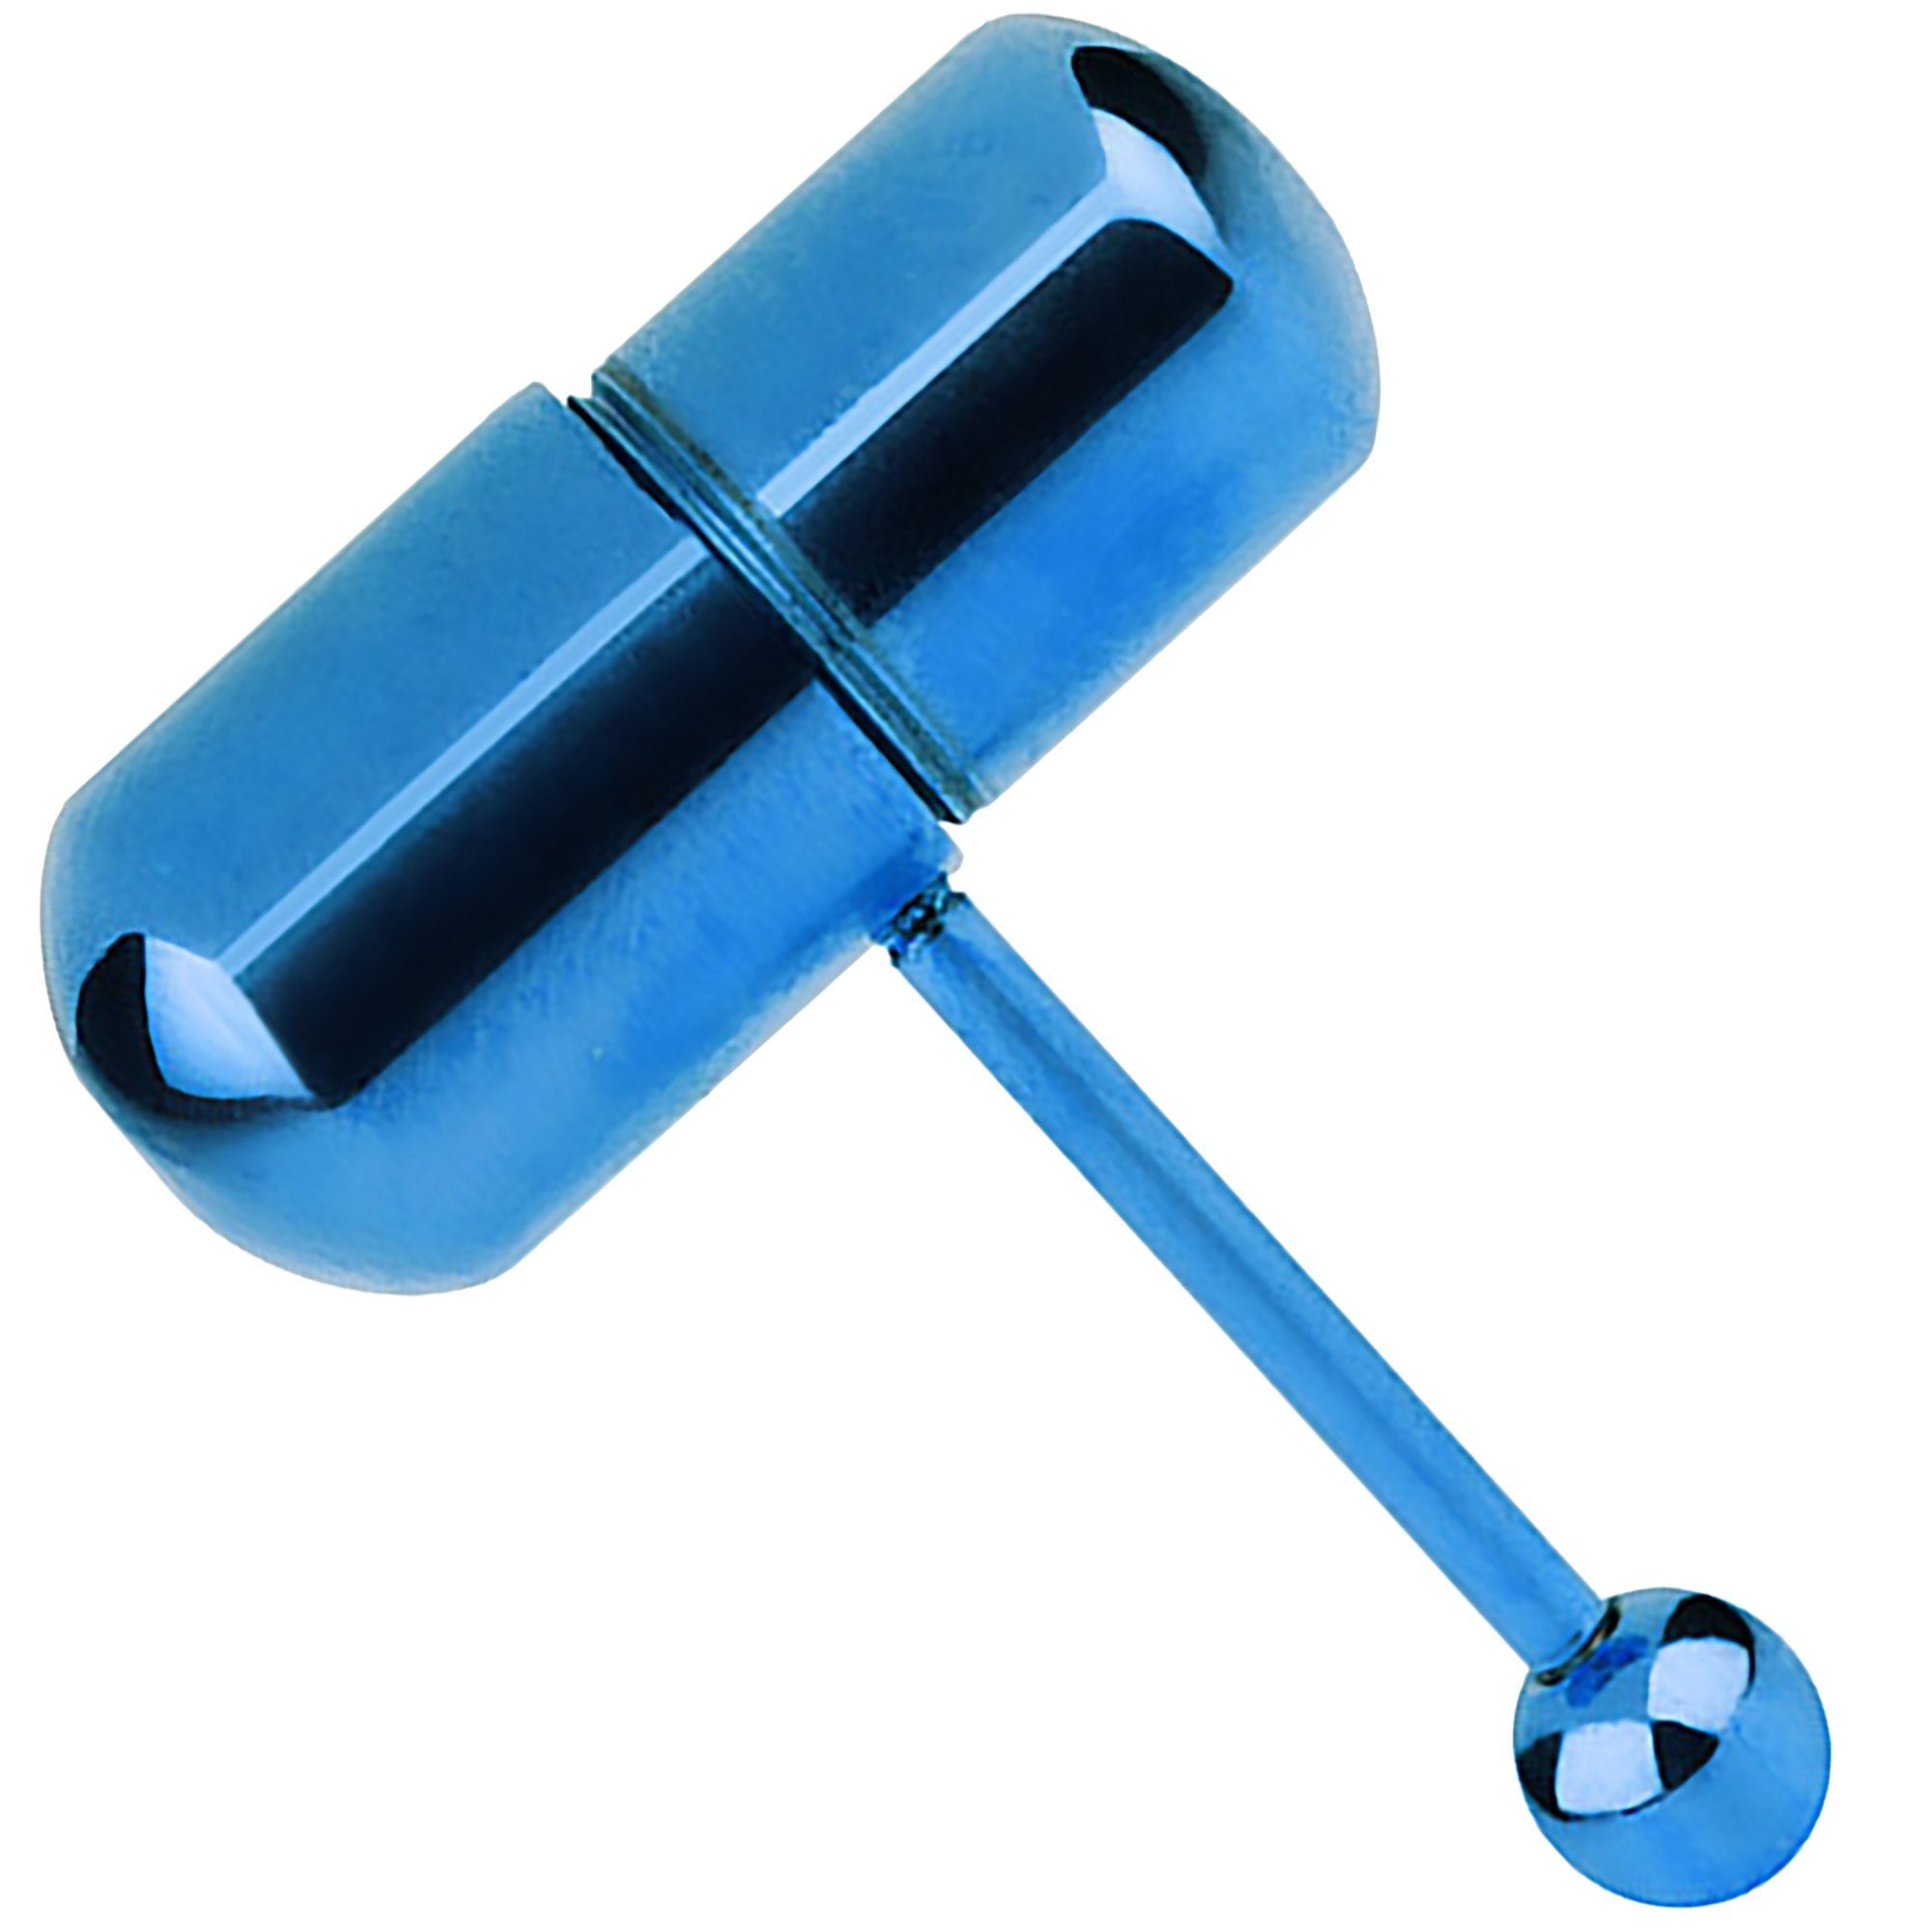 Hantel Piercing-Set Vibrierendes Barbell Stab Blau Piercingfaktor Kugel Tragus Taffstyle Helix Intim Oral Stecker Zungenpiercing Fun, Ohrpiercing